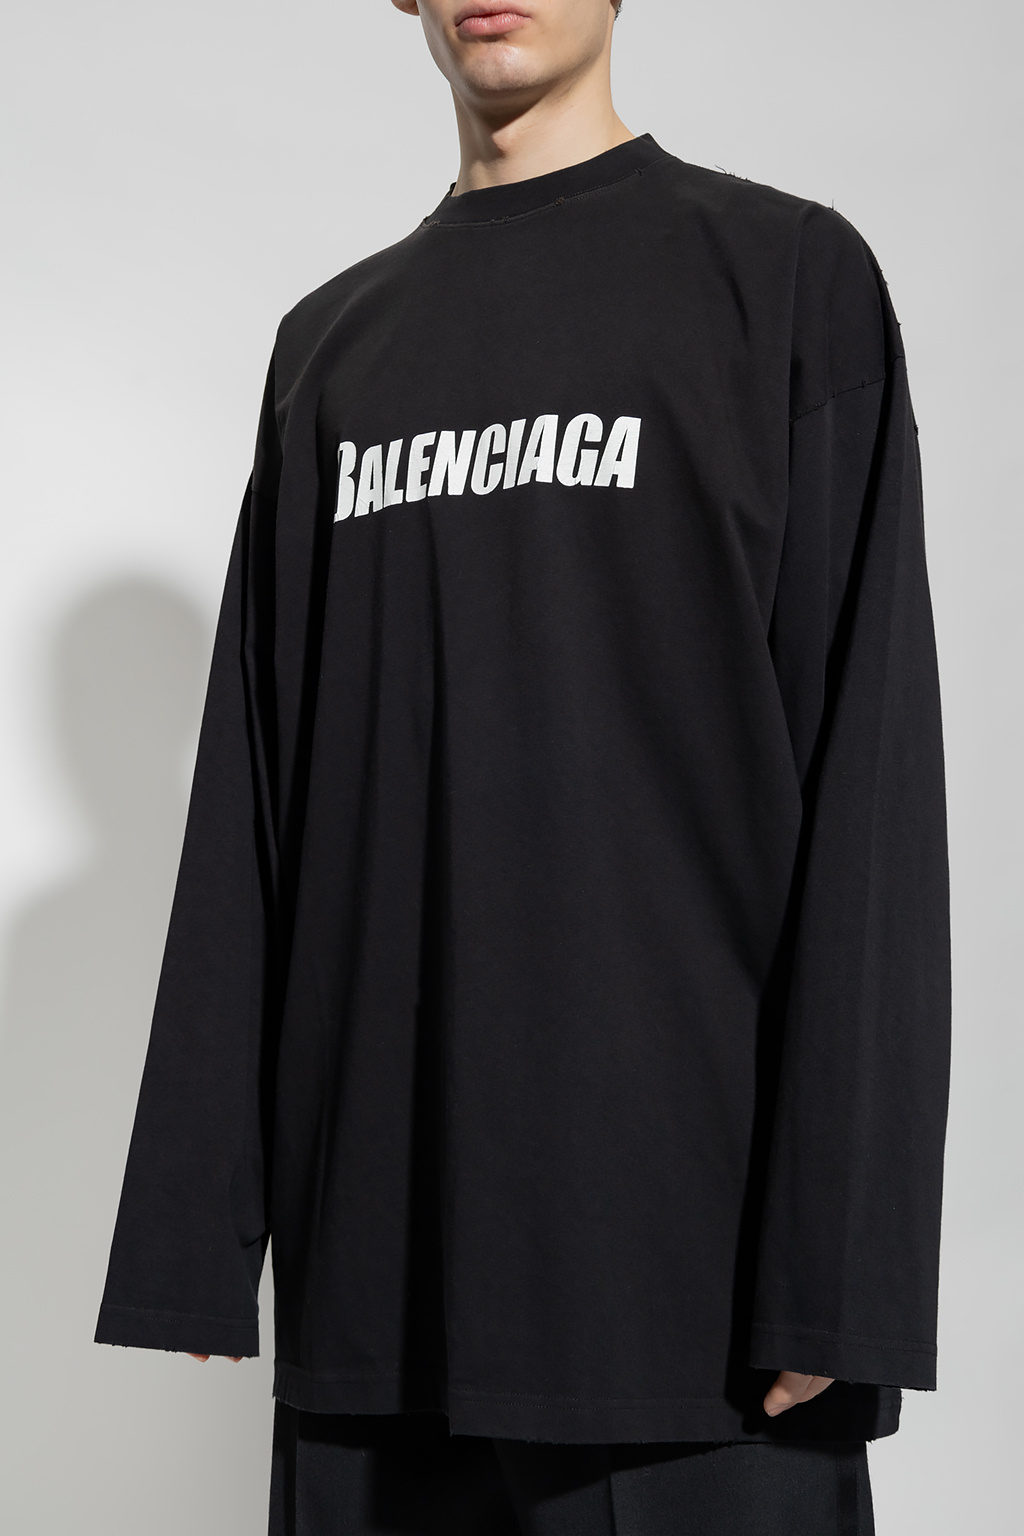 Balenciaga Long Sleeve Cotton Poplin Concealed Shirt